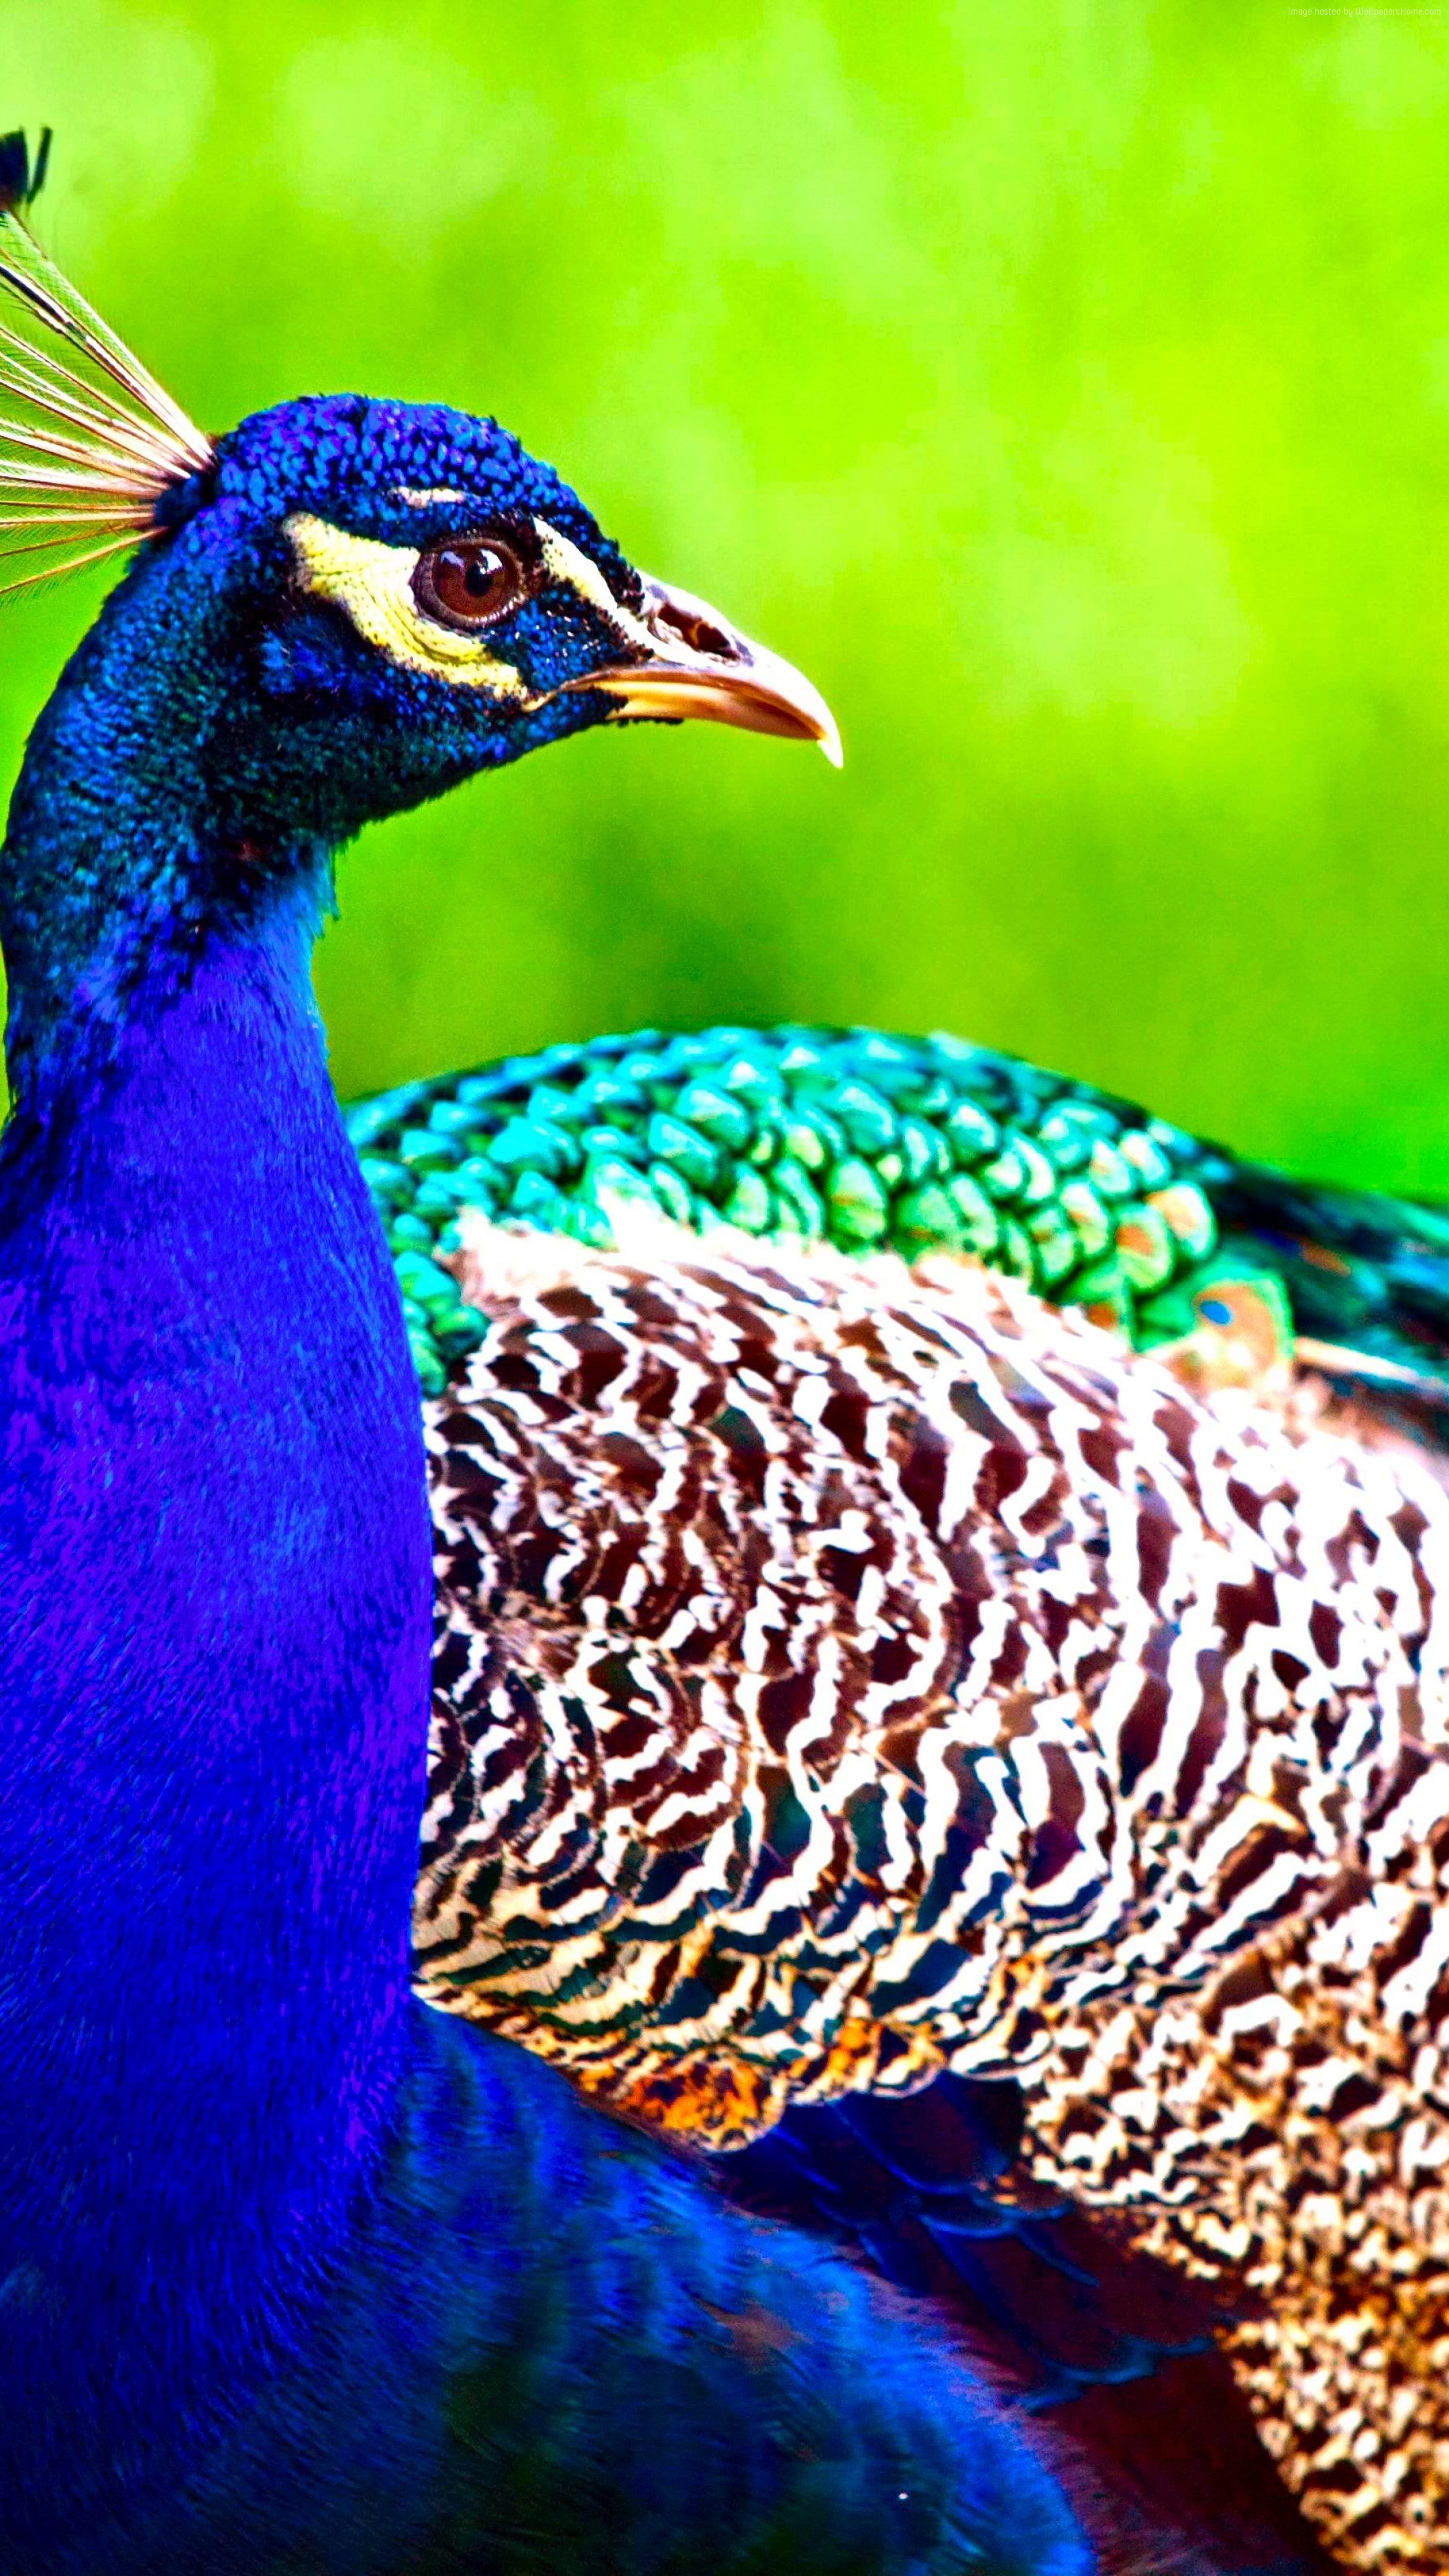 Peacock315869531 - Peacock - Peacock Hd Images Vertical - HD Wallpaper 